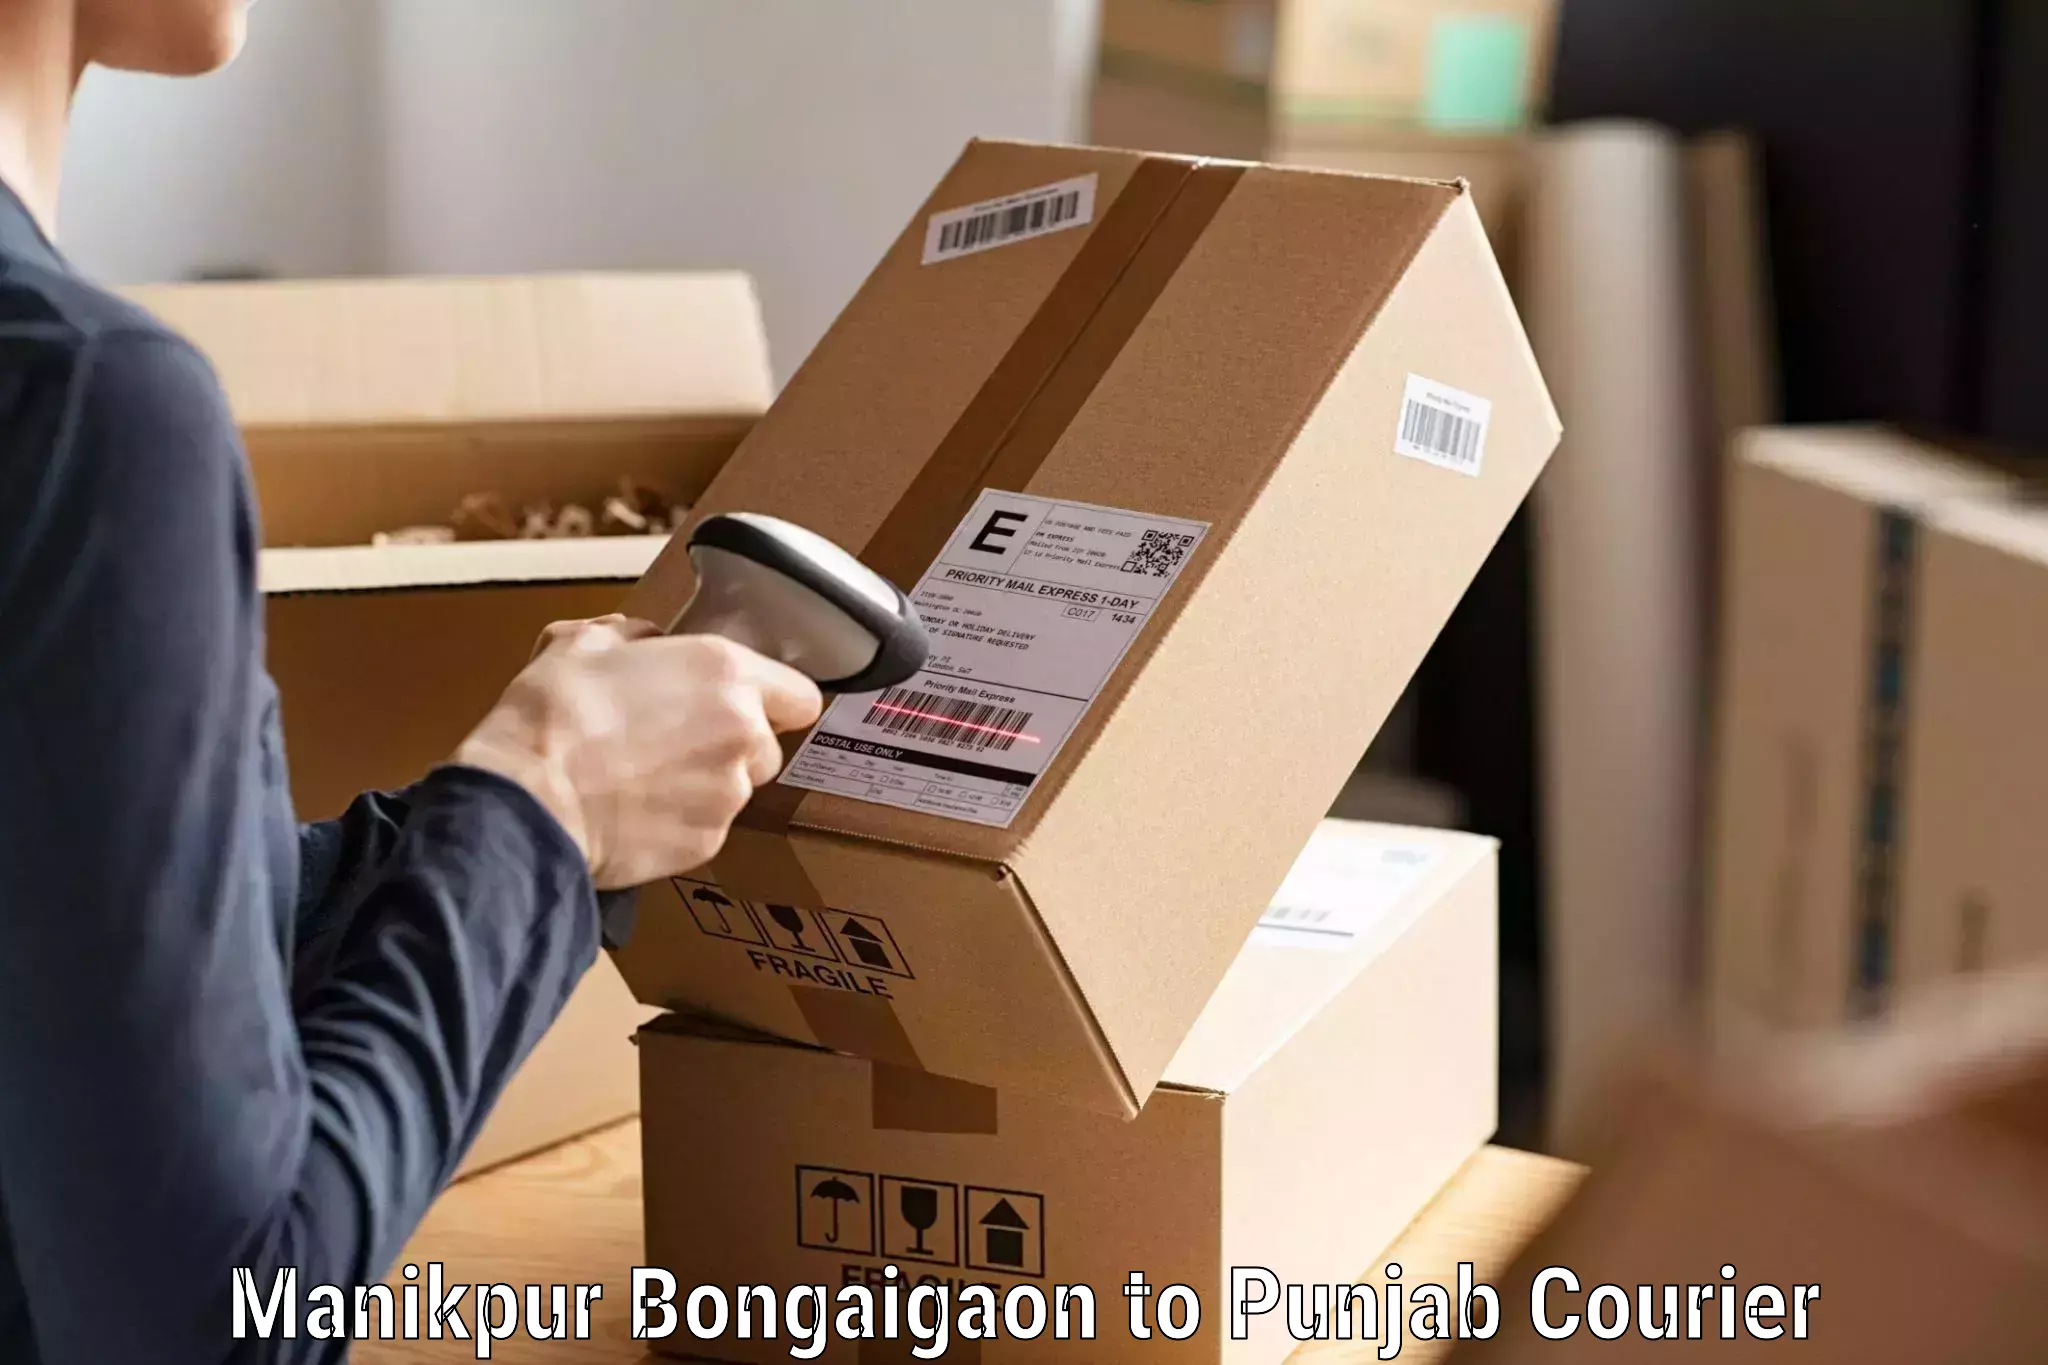 Affordable parcel service in Manikpur Bongaigaon to Raikot